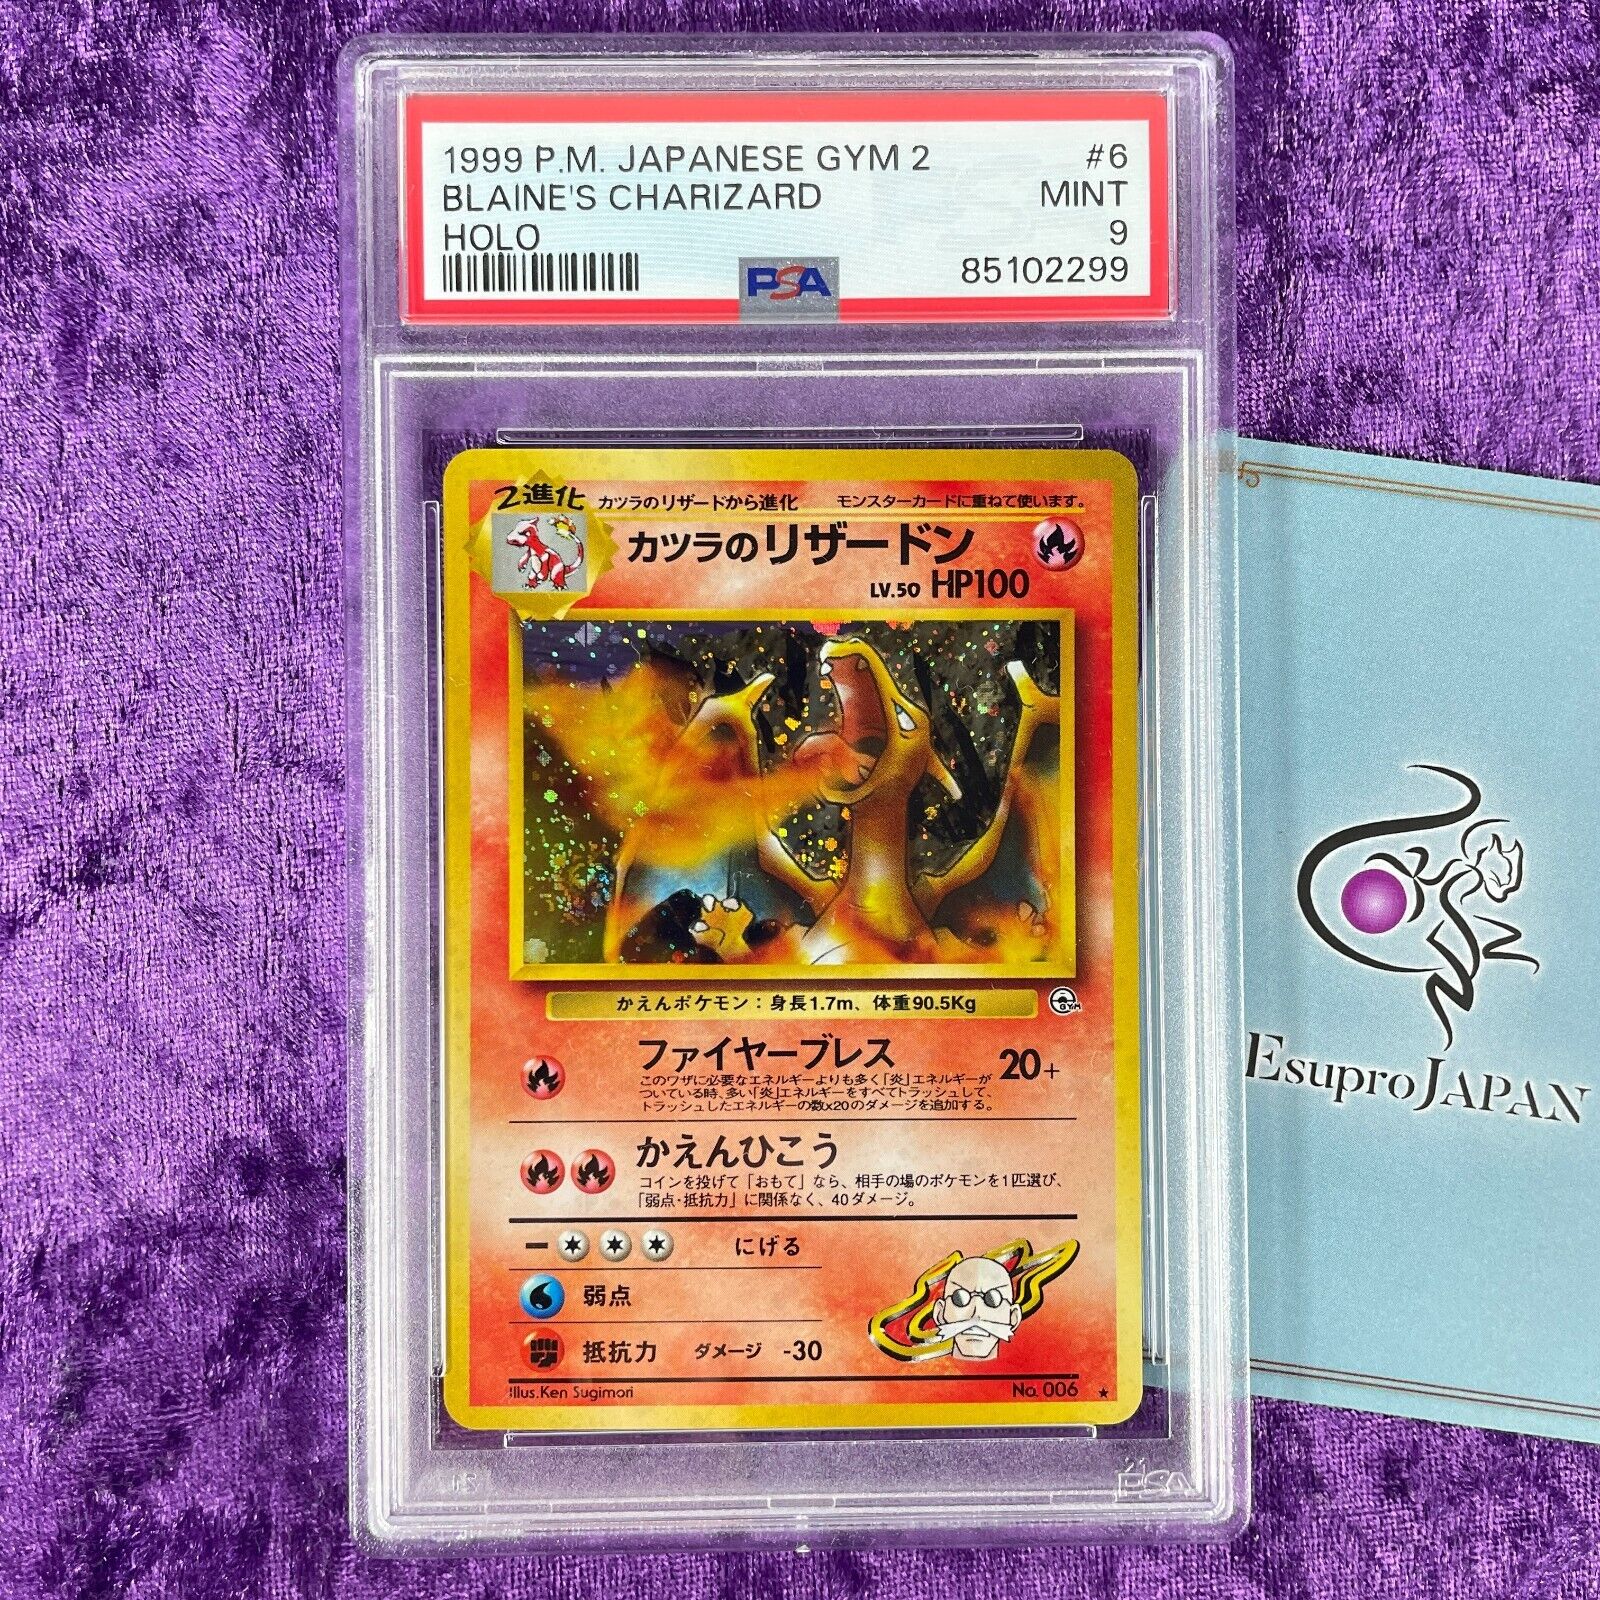 PSA 9 1999 Blaine\'s Charizard Holo #006 Pokemon Card Japanese Gym2 Vintage Mint